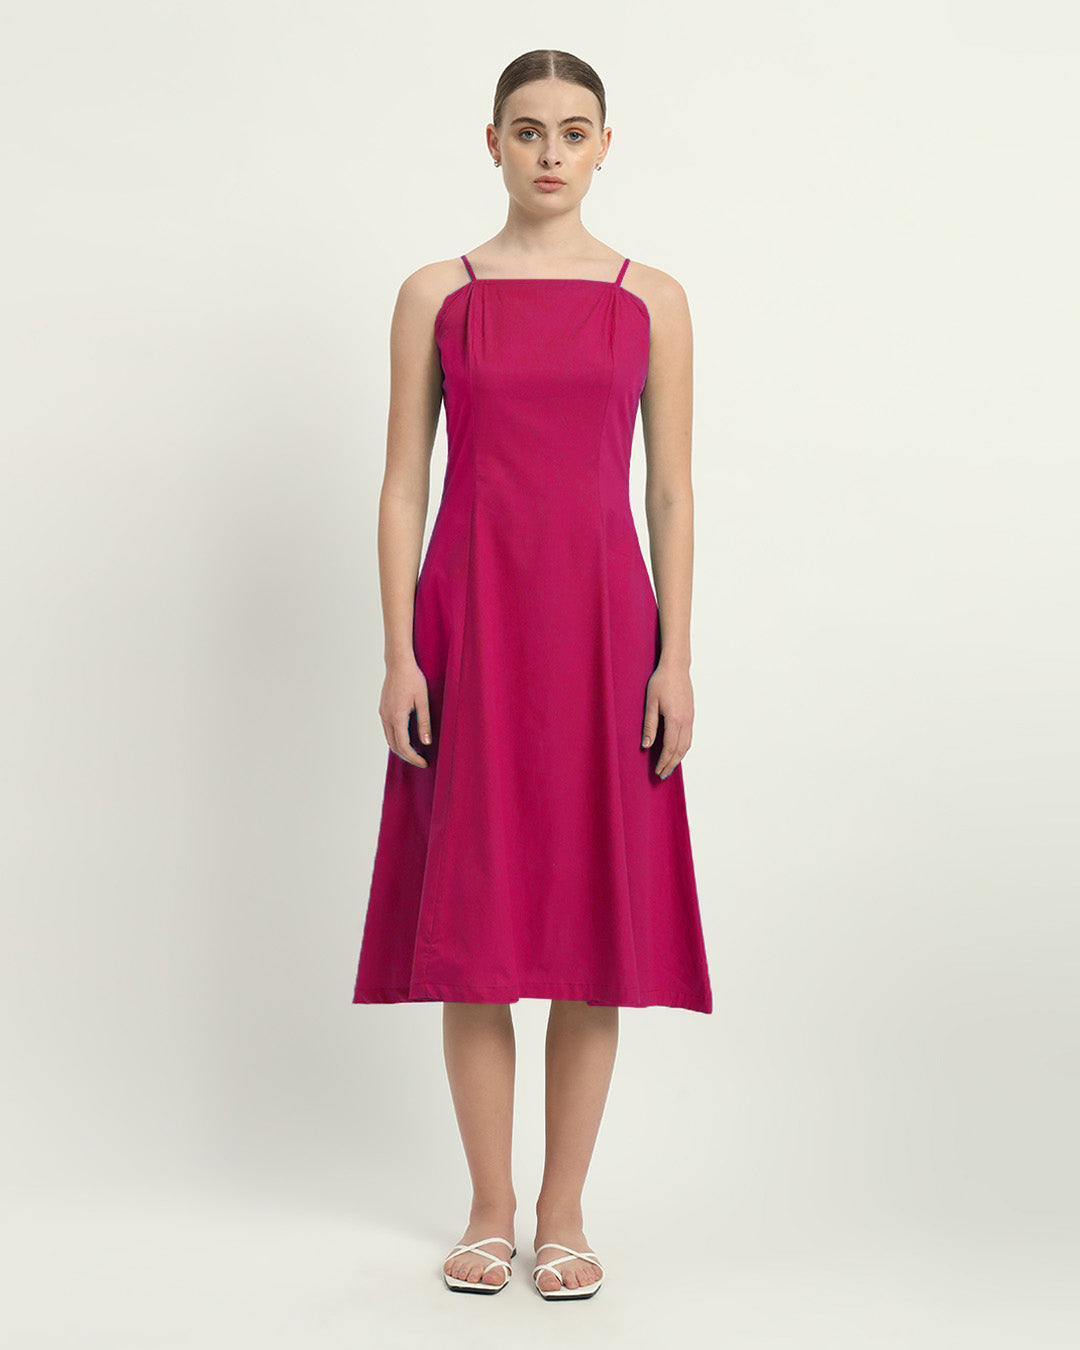 The Berry Valatie Cotton Dress